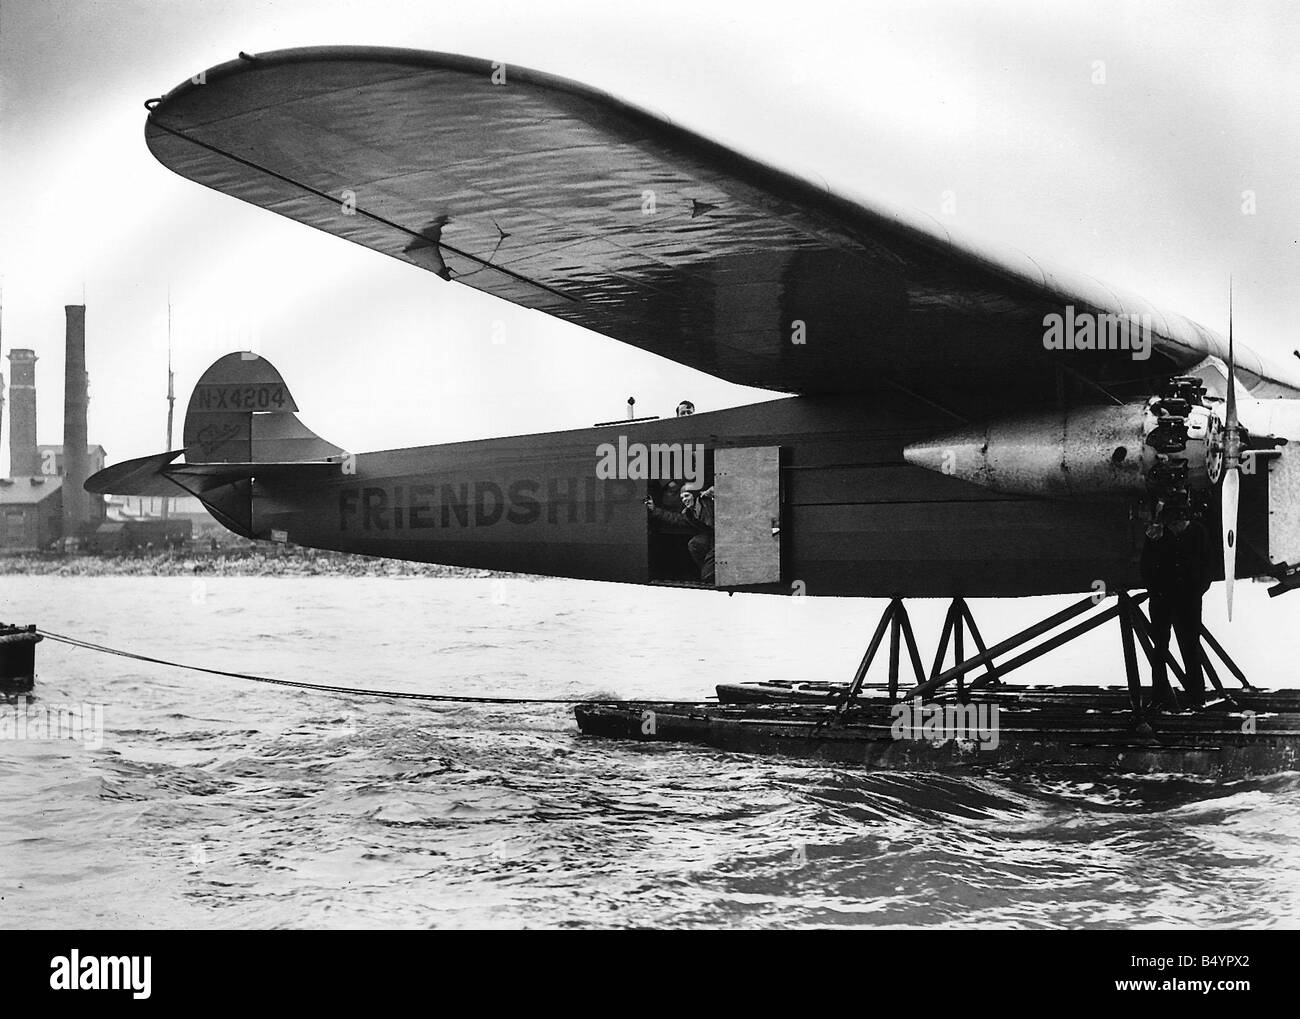 Das Atlantic Flugboot Freundschaft in Southampton 1928 Amelia Earhart wegweisende Flug über den Atlantik Stockfoto